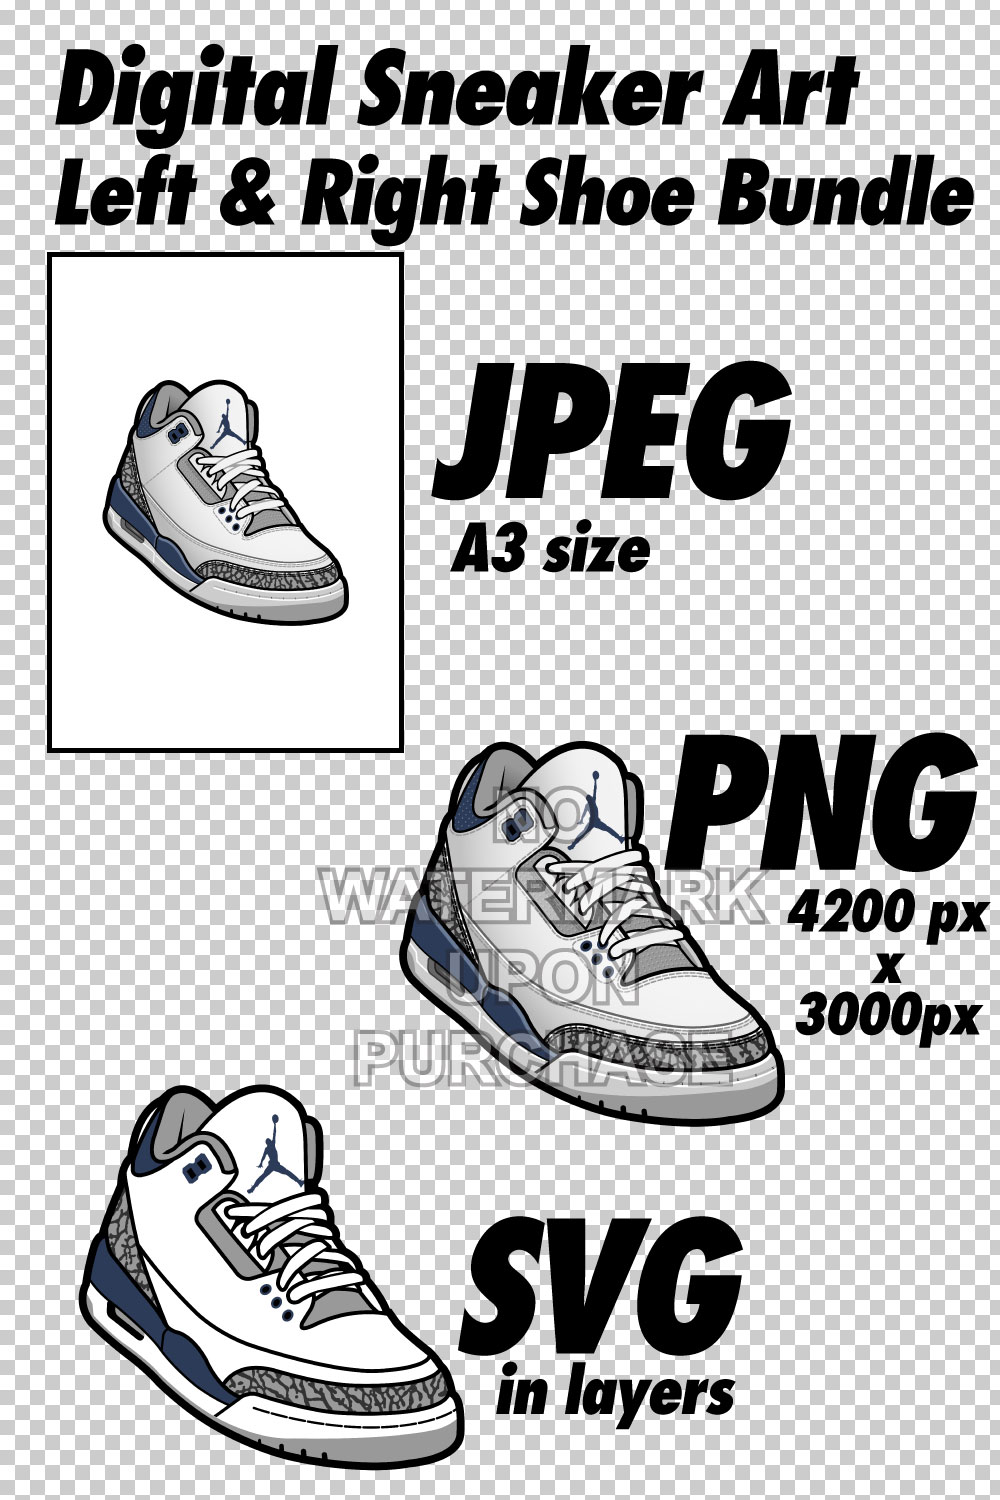 Air Jordan 3 Midnight Navy White JPEG PNG SVG right & left shoe bundle pinterest preview image.